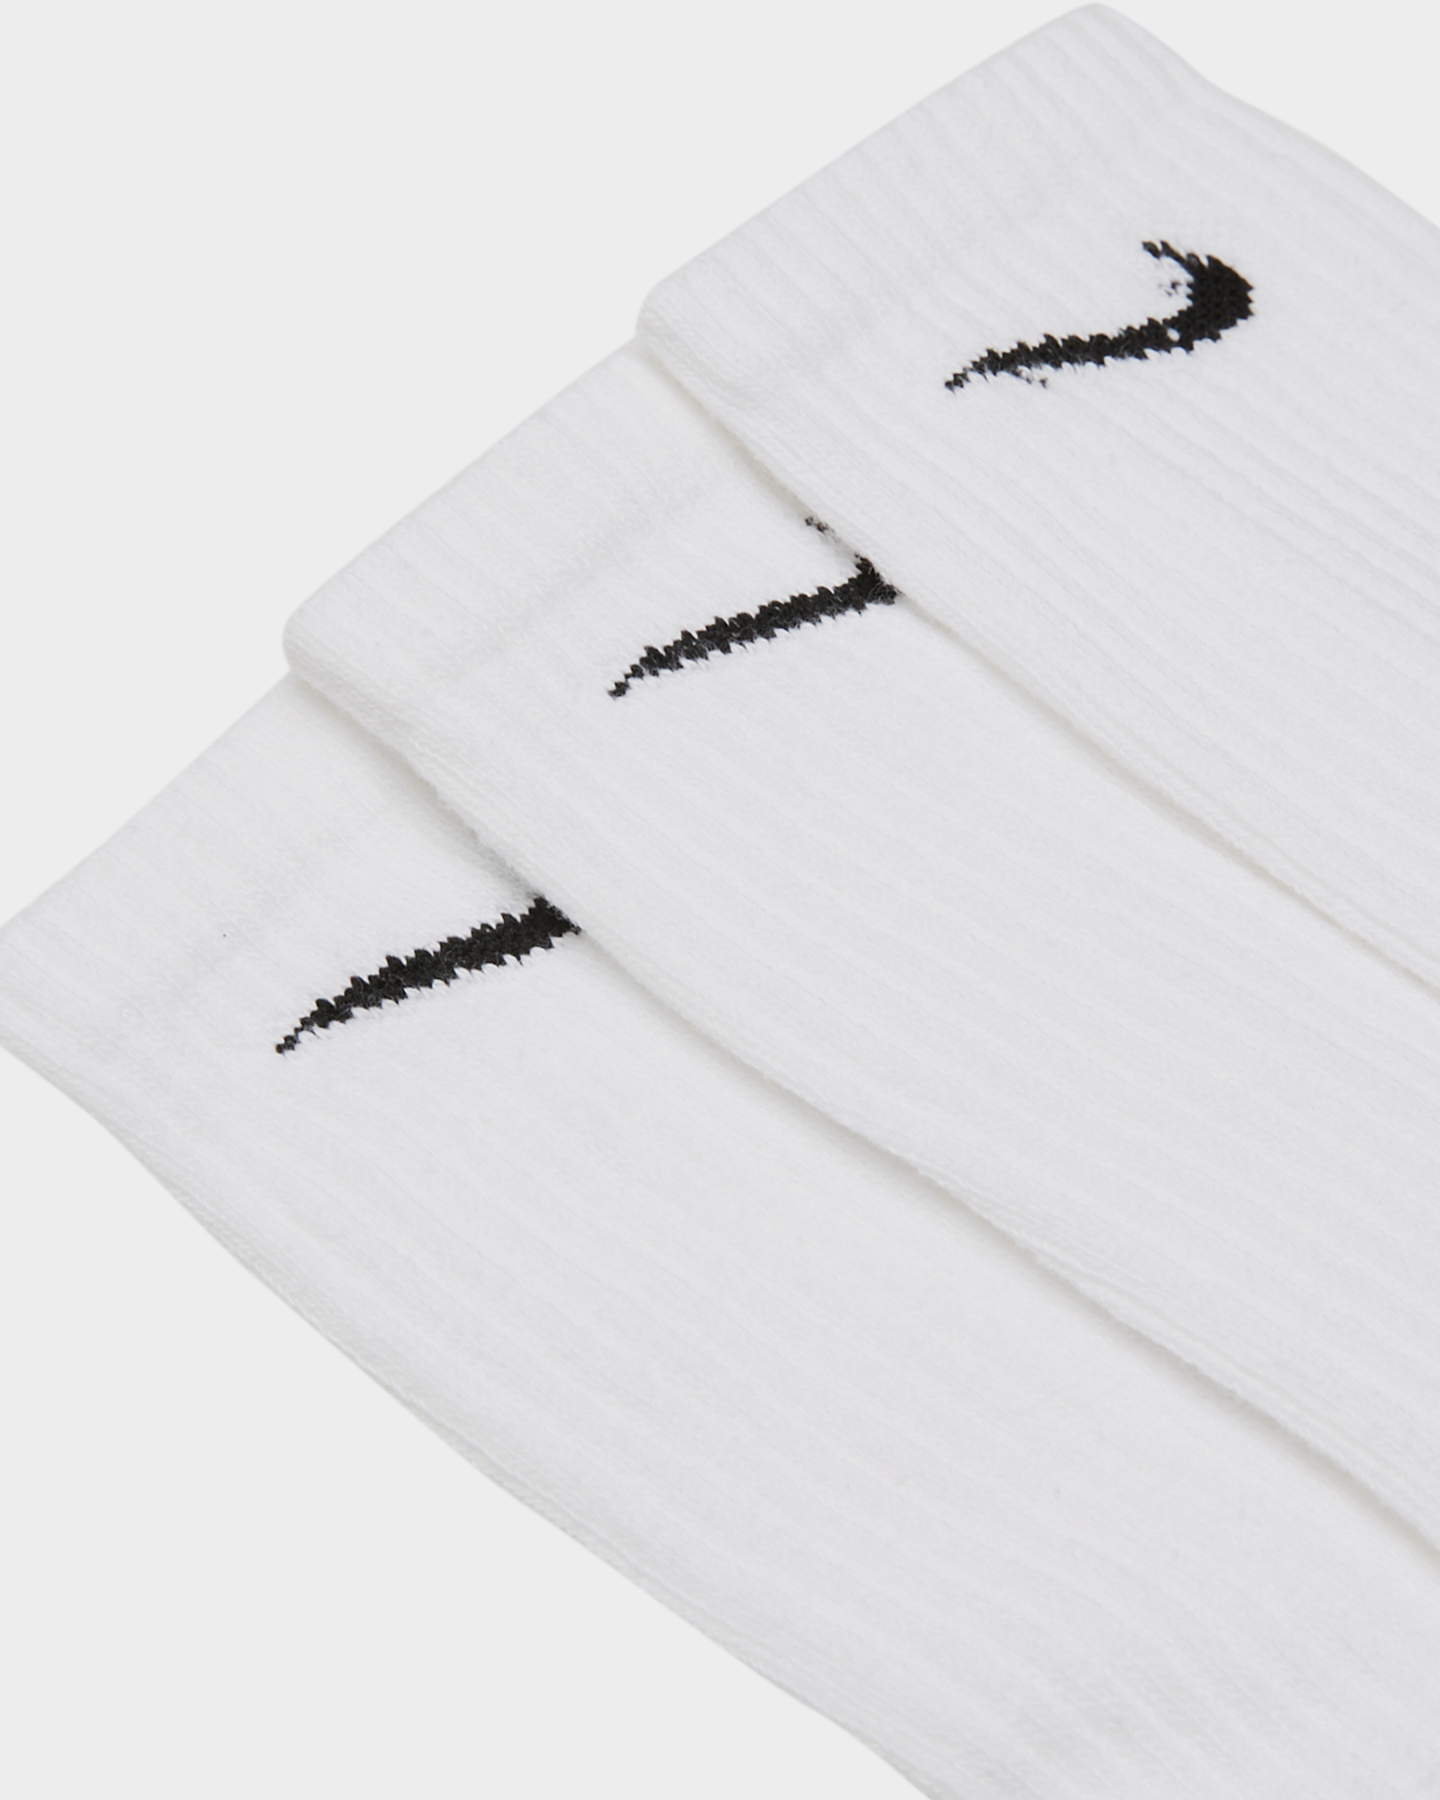 Nike Everyday Cushion 3 Pack Crew Socks - White Black | SurfStitch